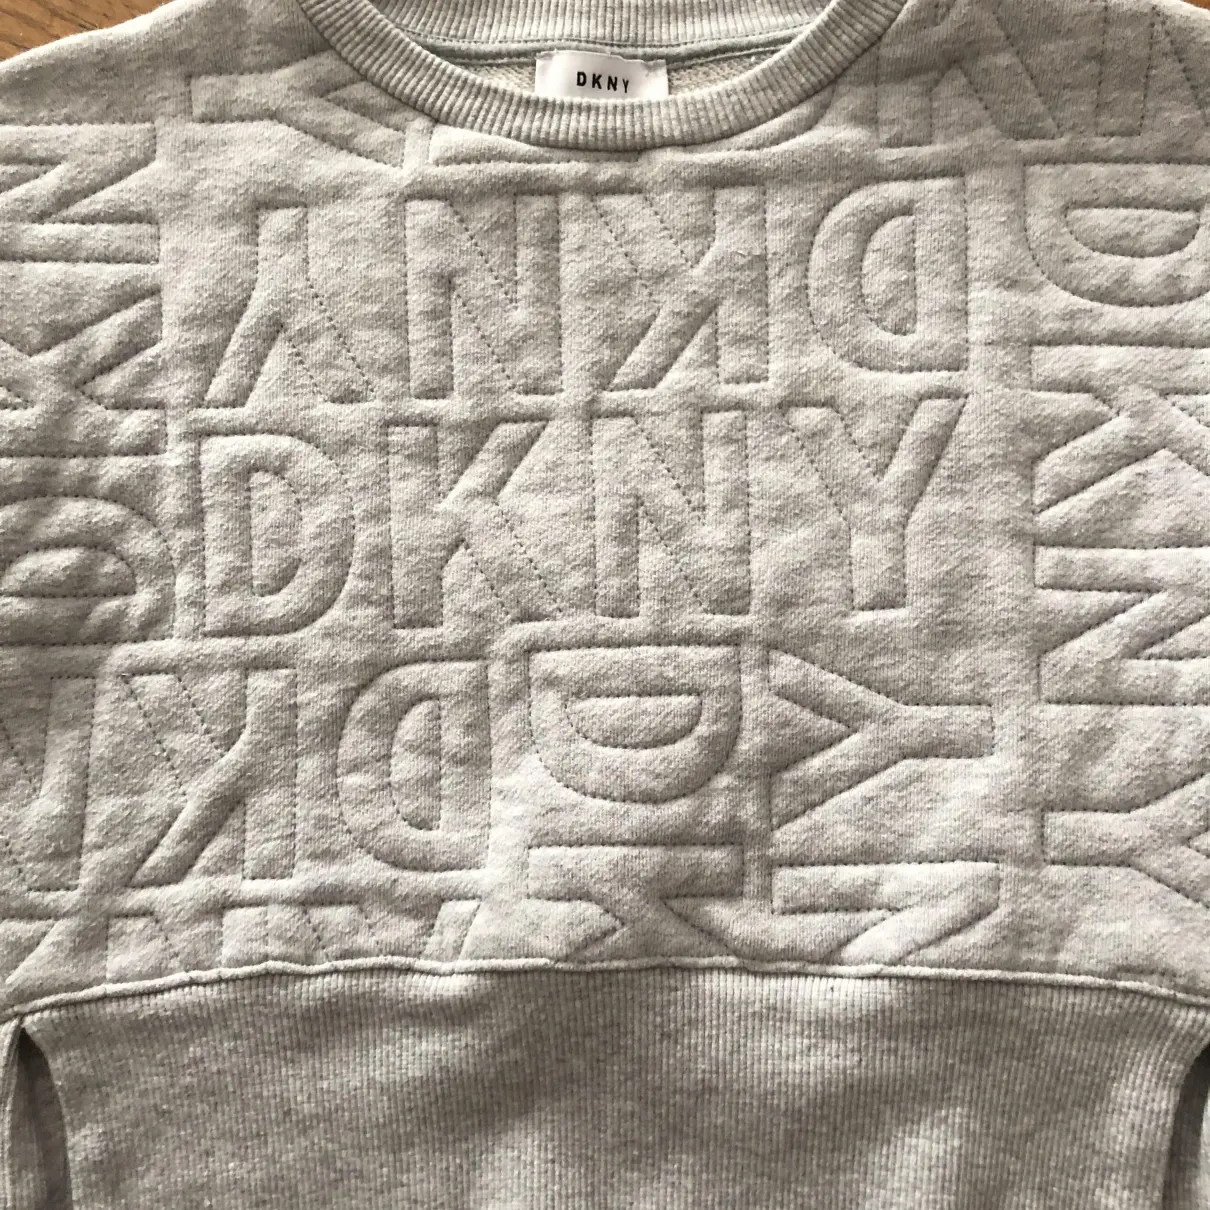 Buy Dkny Sweatshirt online